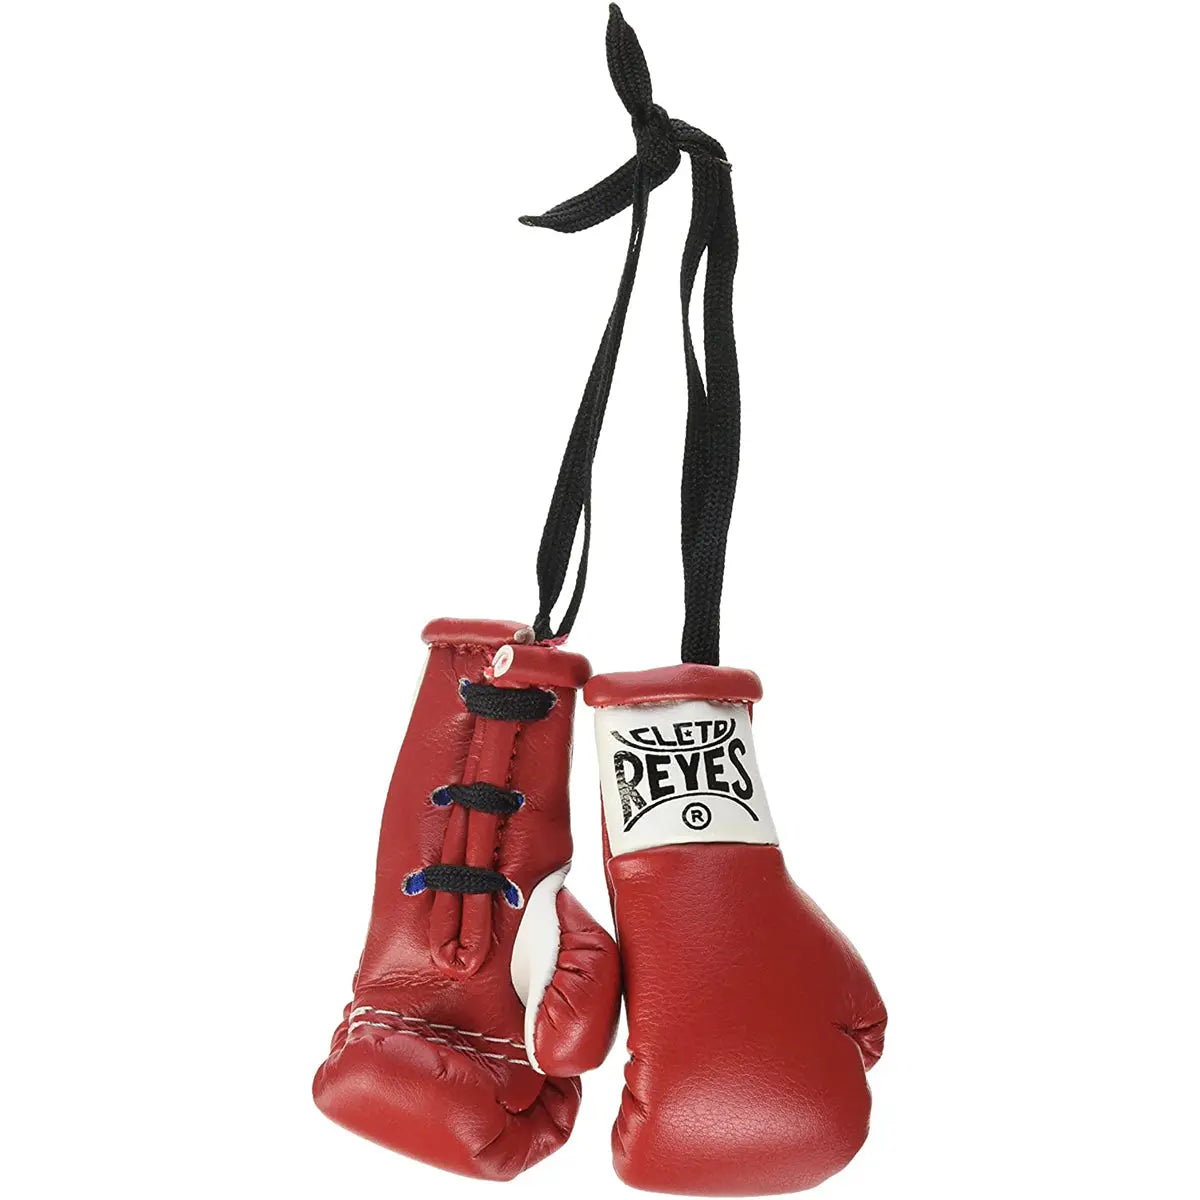 Cleto Reyes Miniature Pair of Boxing Gloves - Silver Cleto Reyes